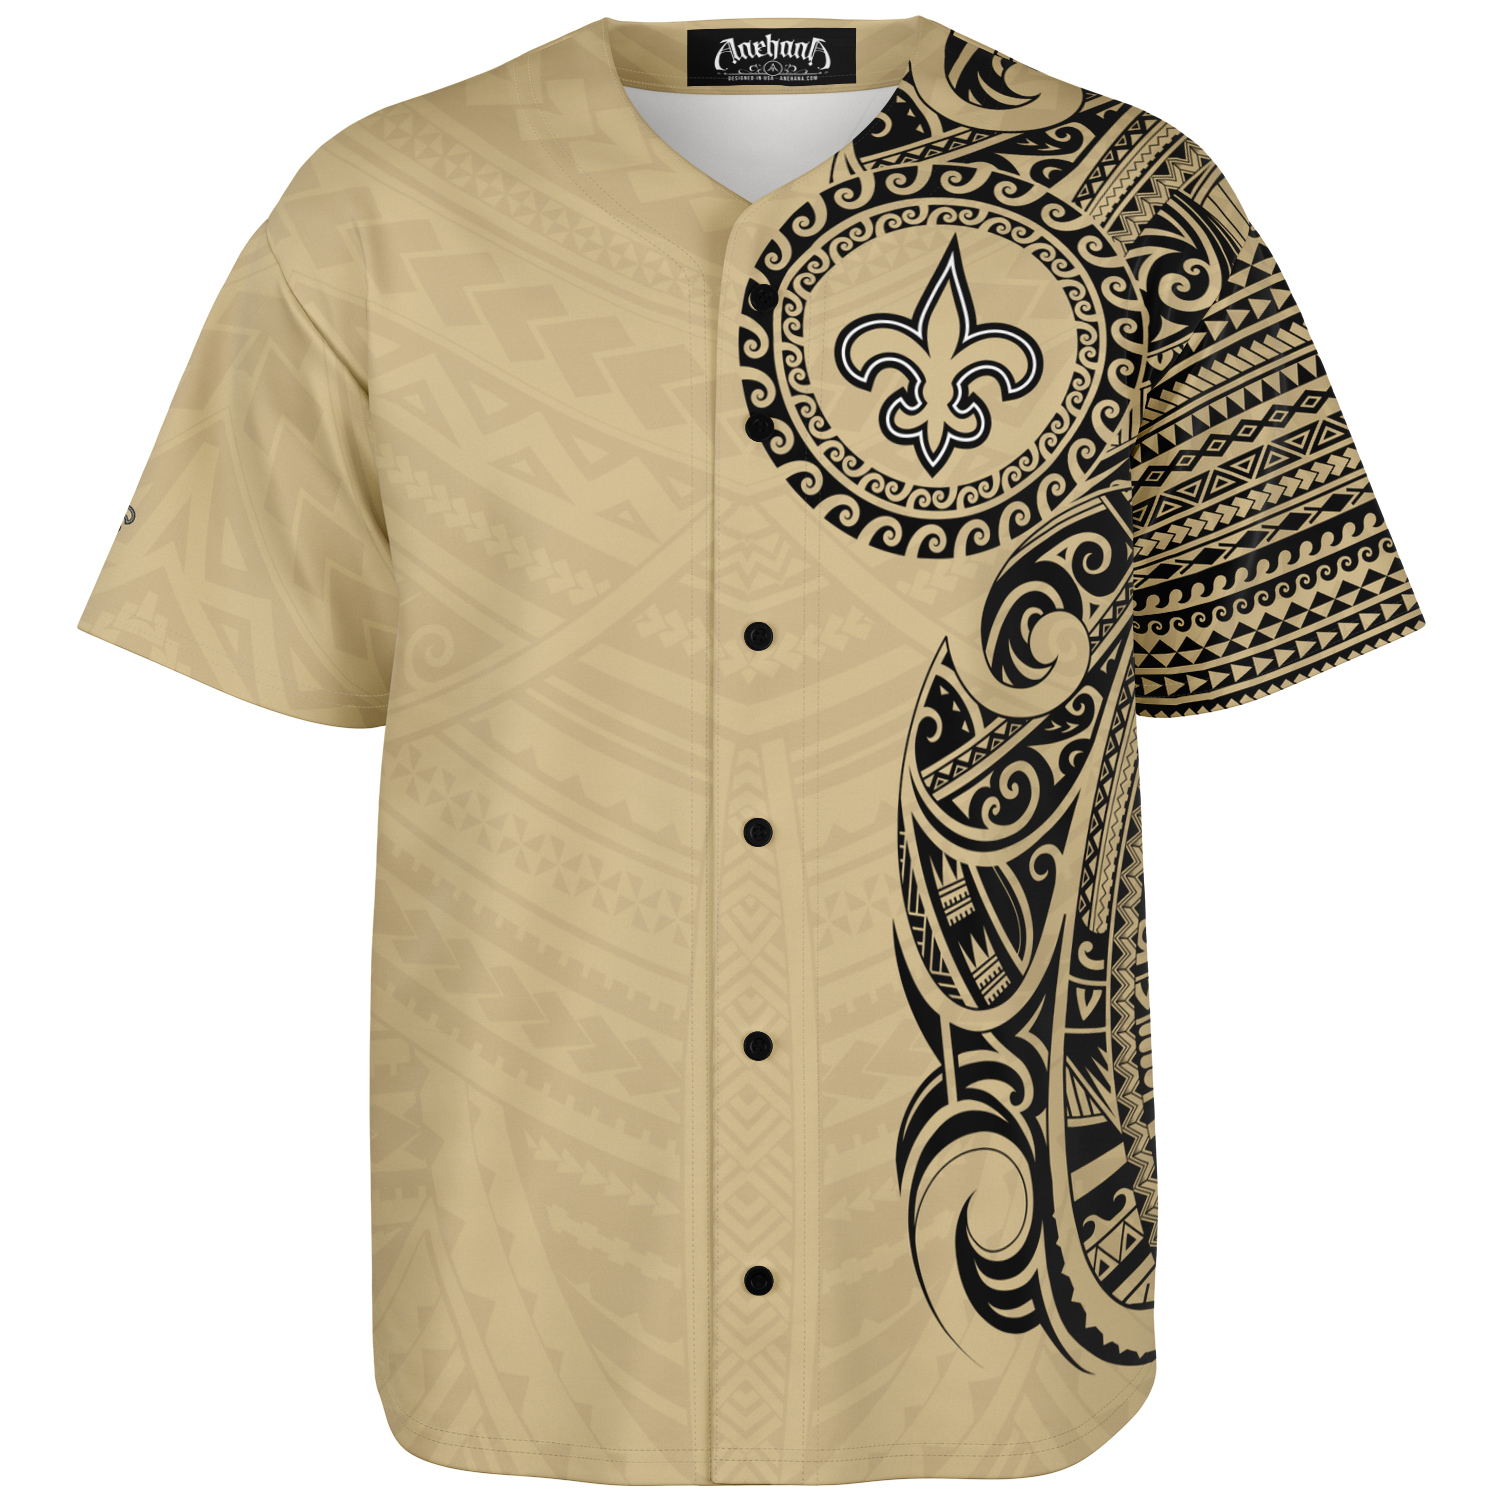 New Orleans Saints NFL Jersey – Polynesian Design Old Gold – Anehana